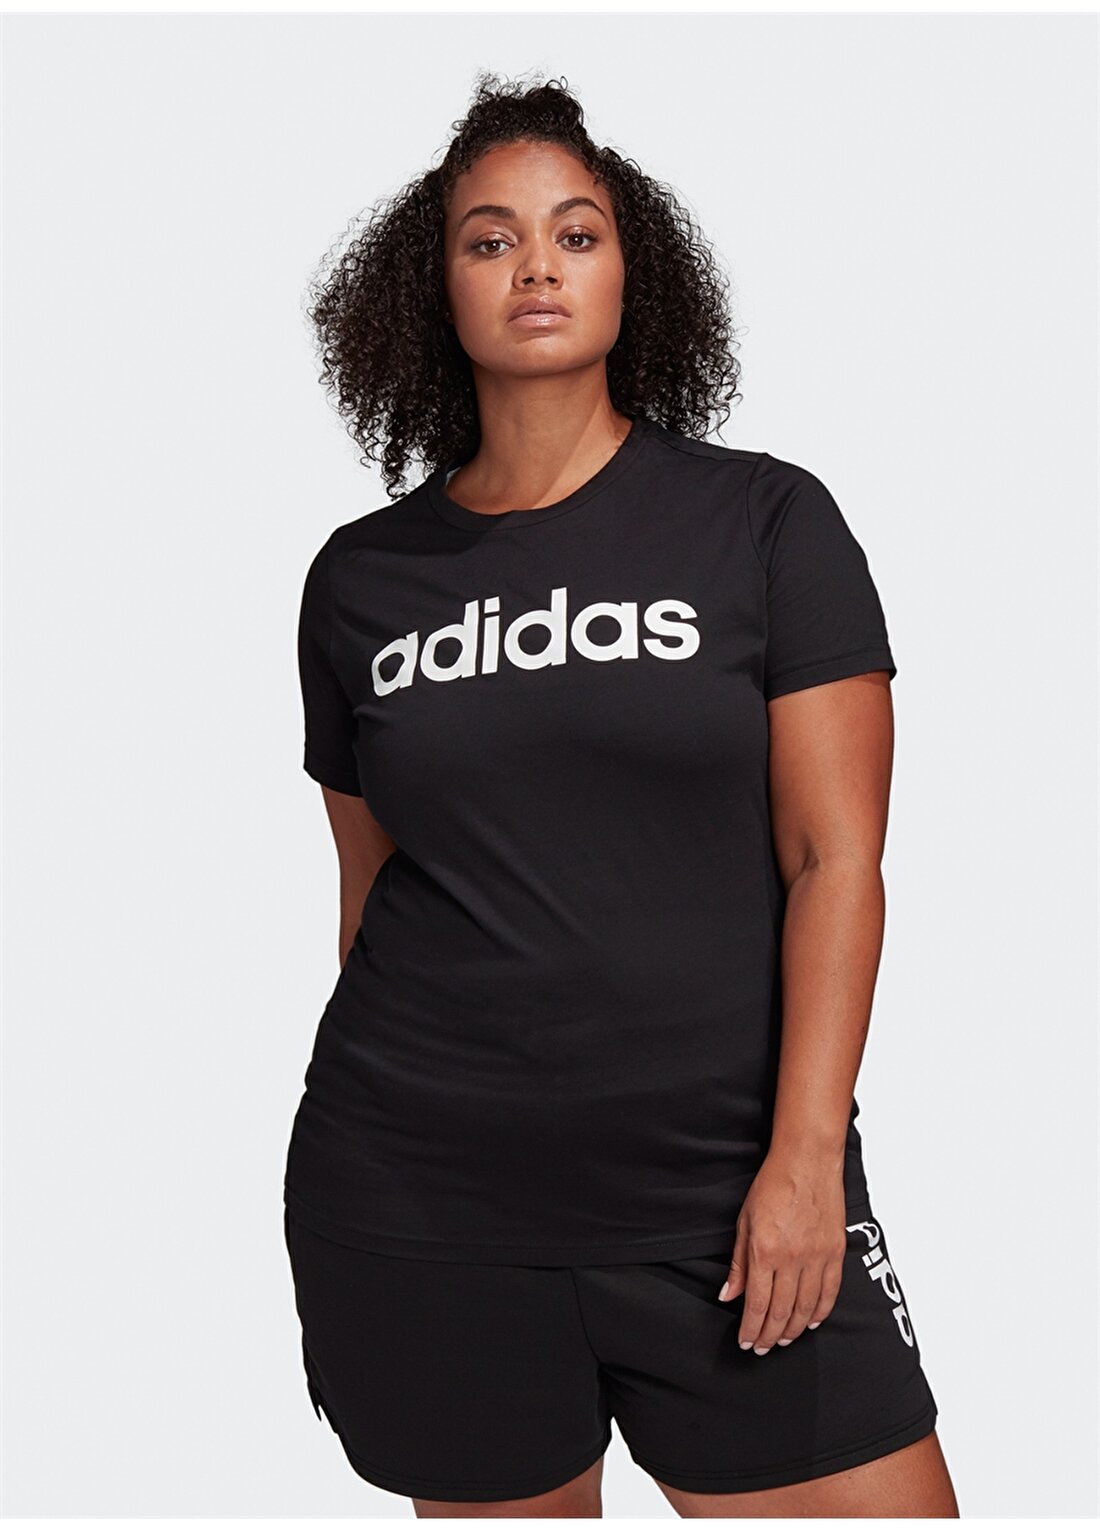 Adidas Essentials Inclusive-Sizing T-Shirt